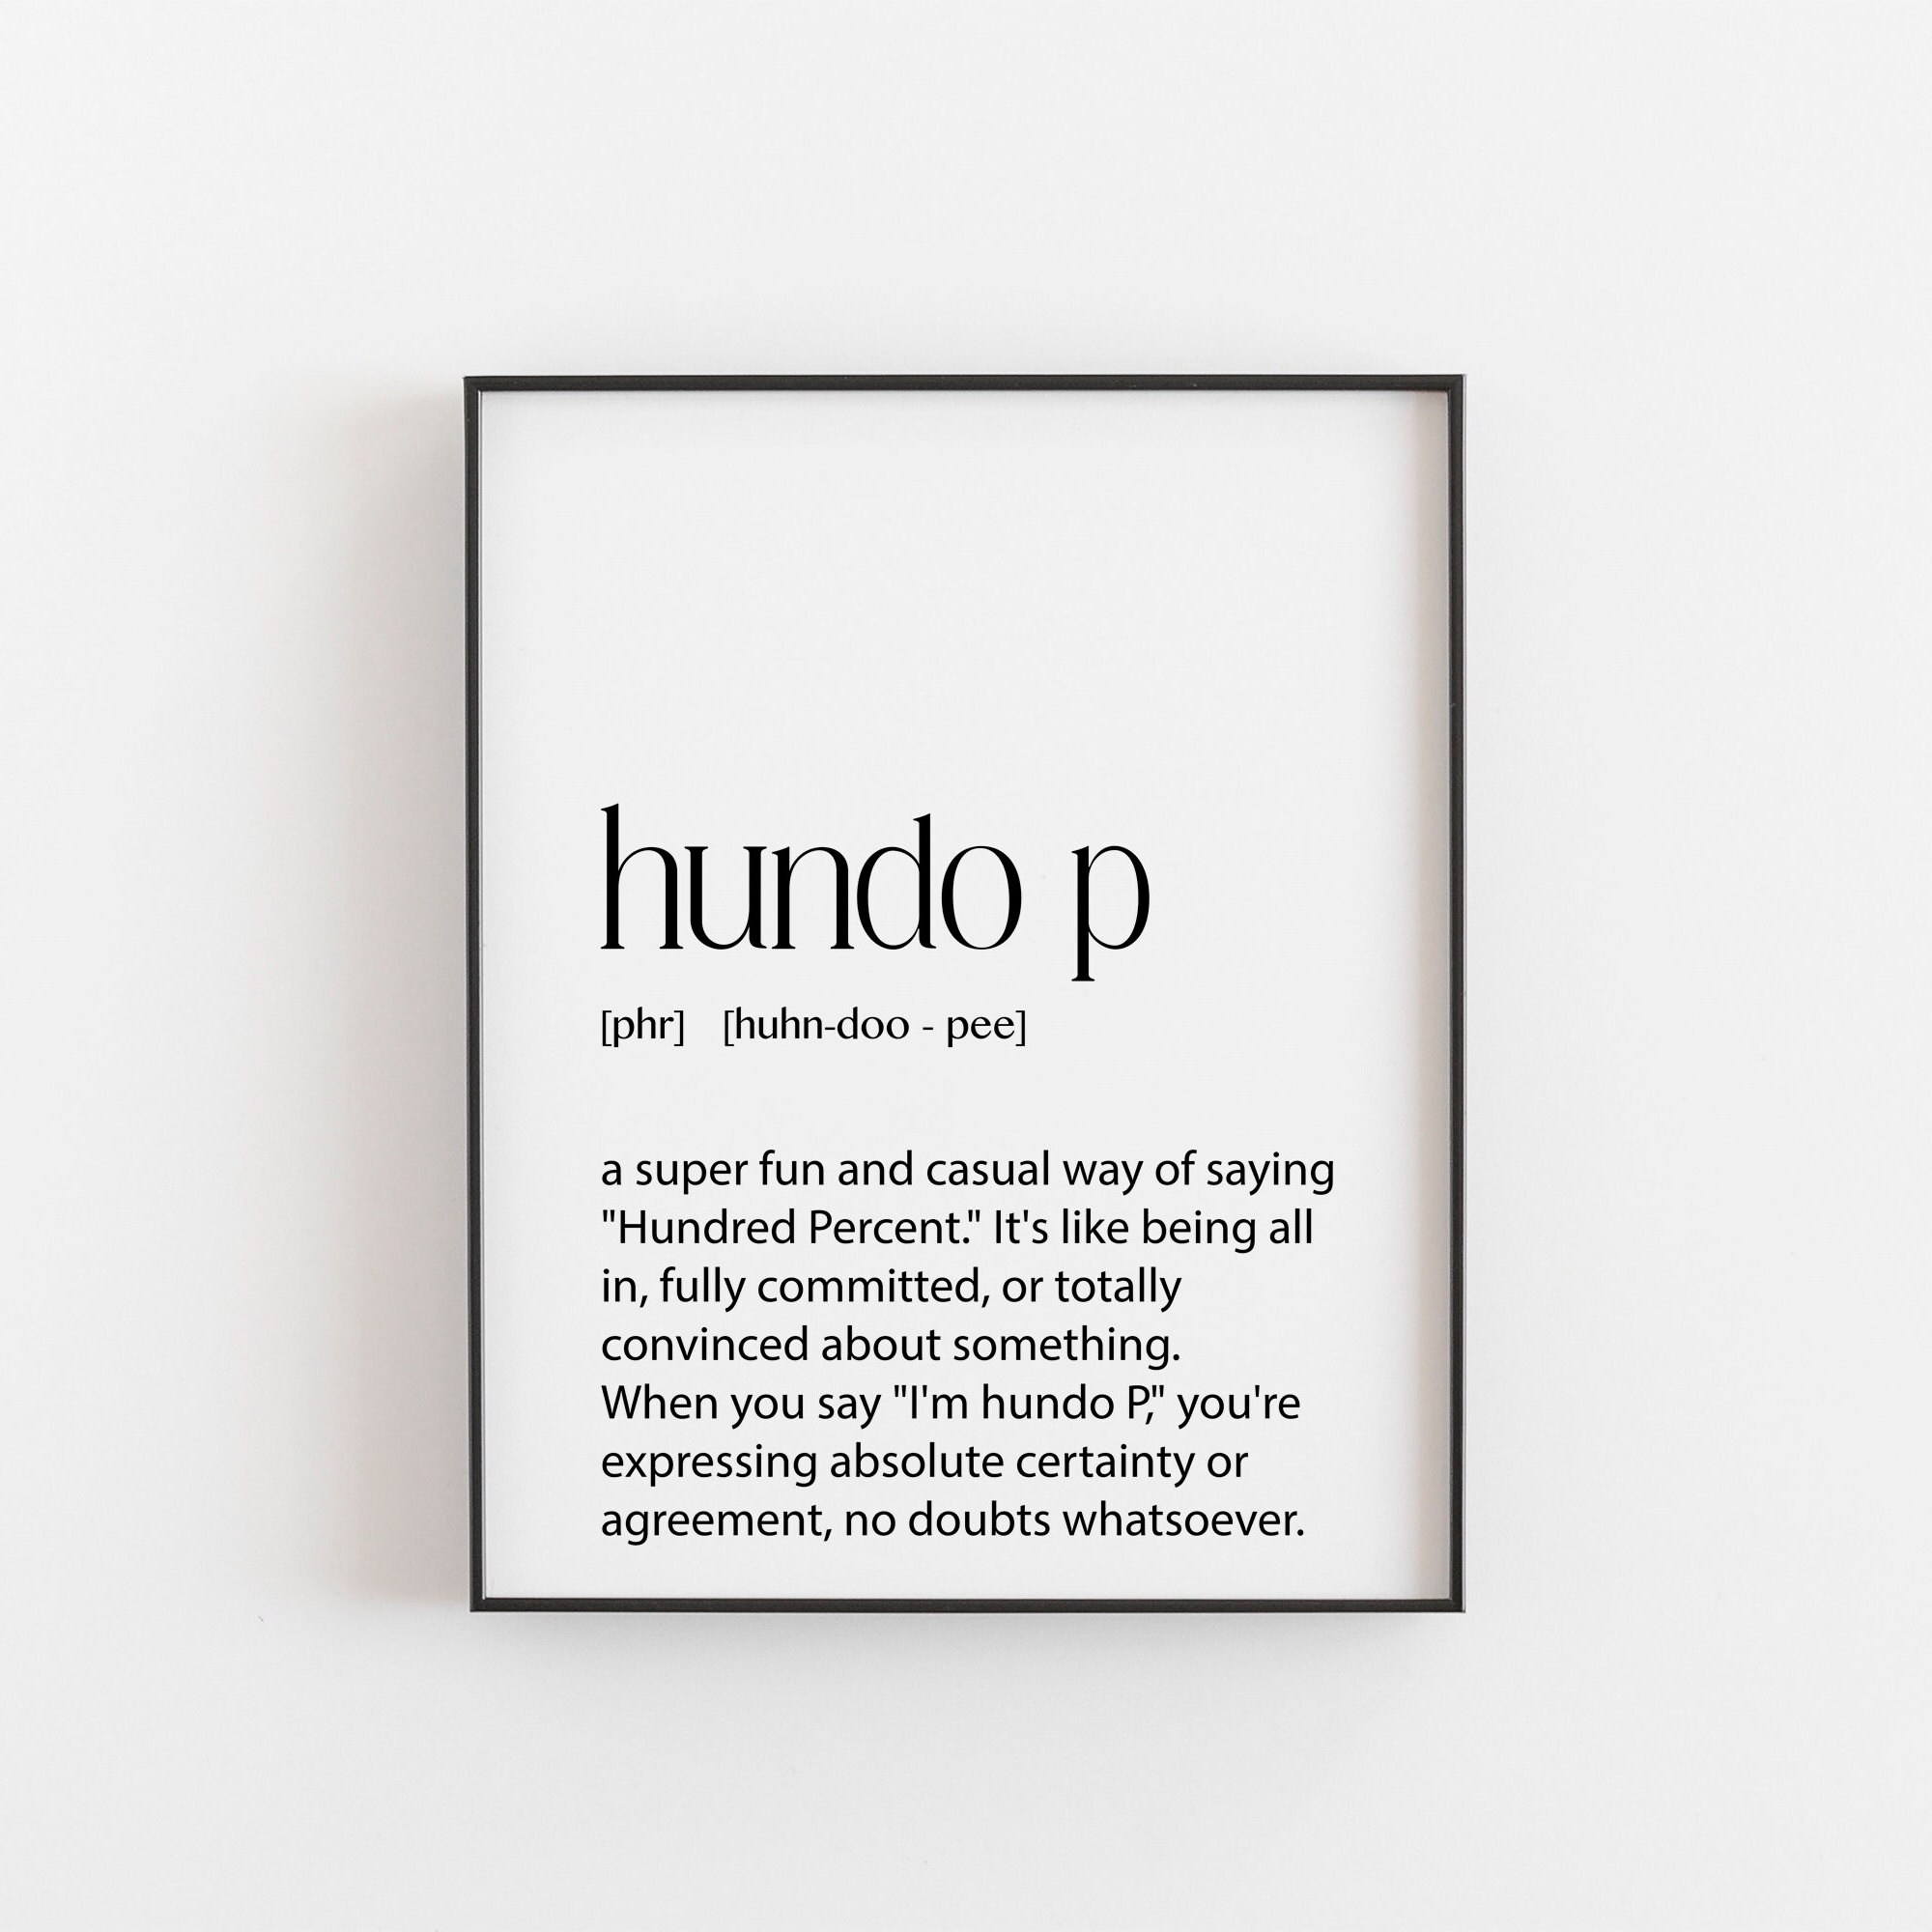 What's an event hundo, a fundo? : r/pokemongo